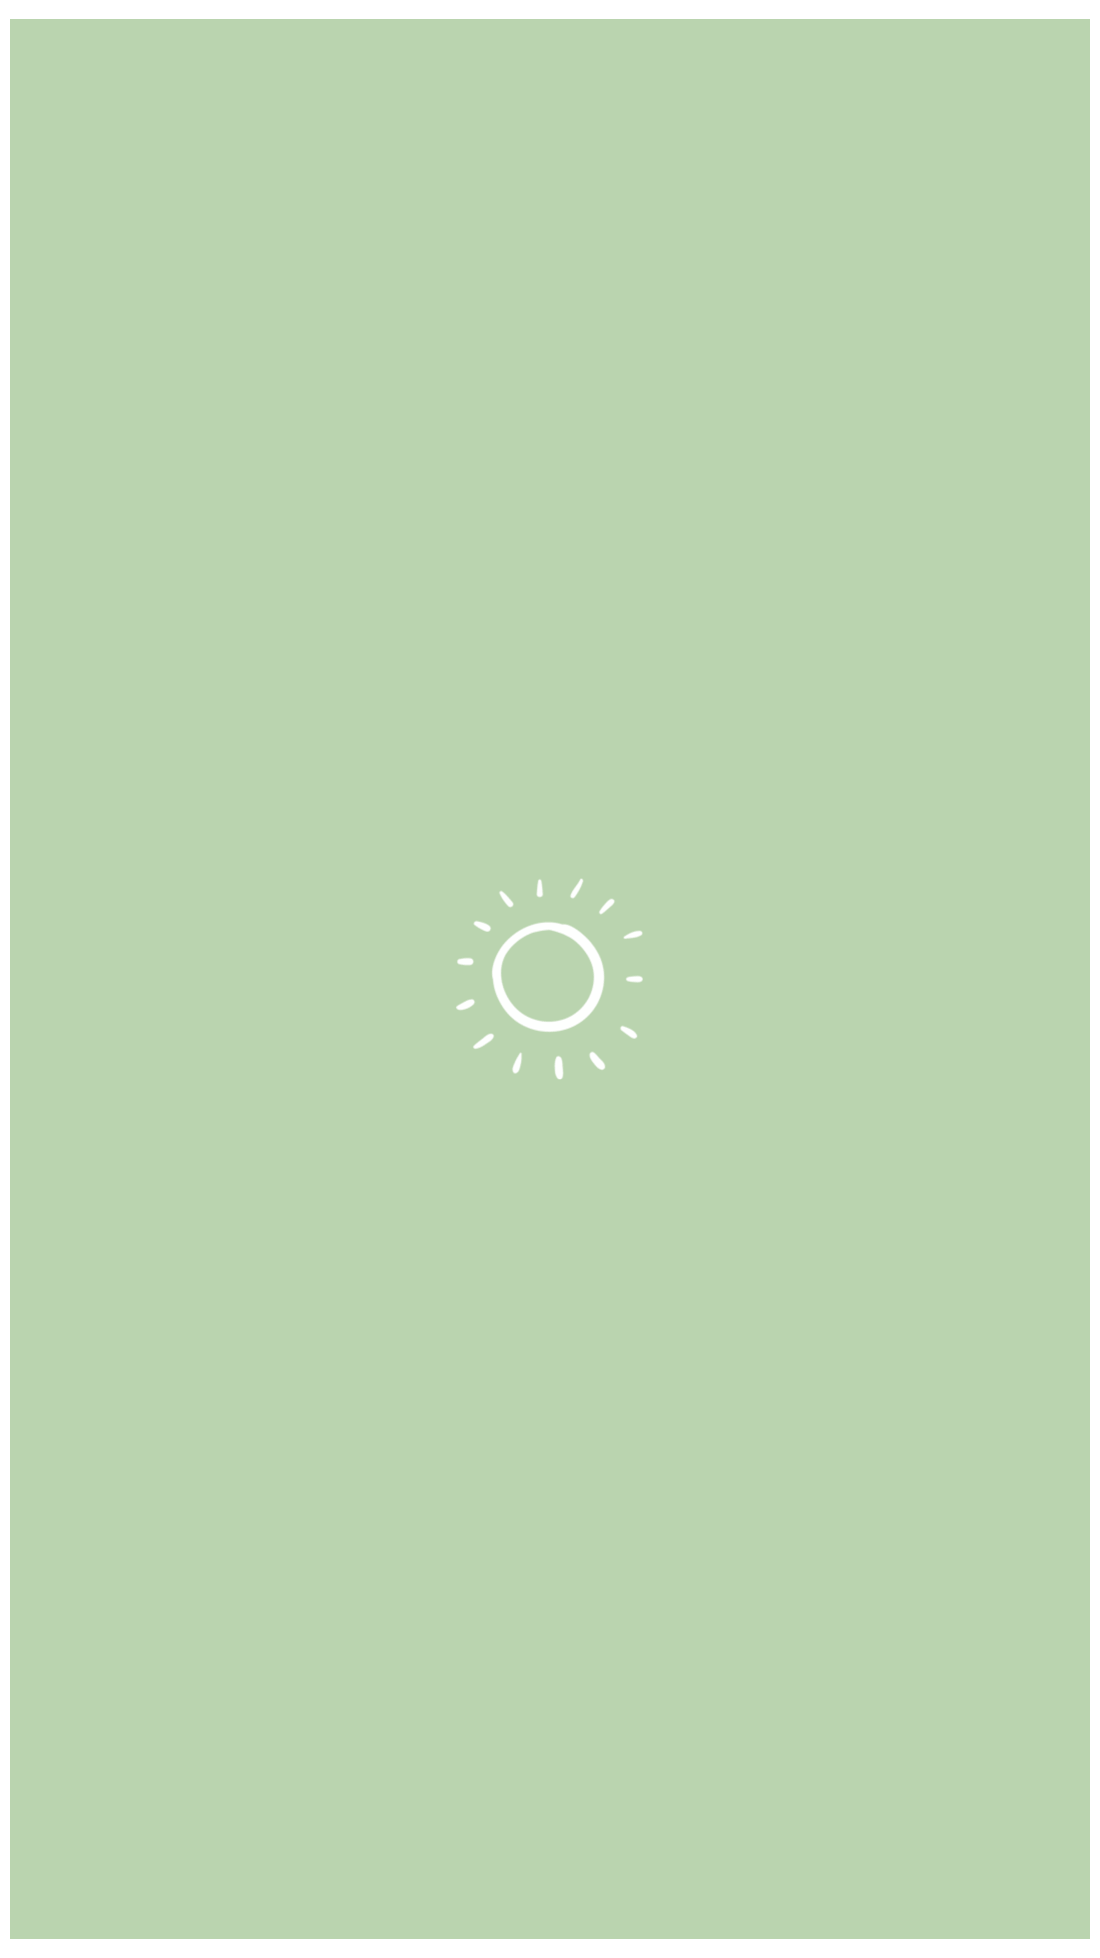 spongebob wallpaper #green #minimalist #wallpaper #iphone May 2020